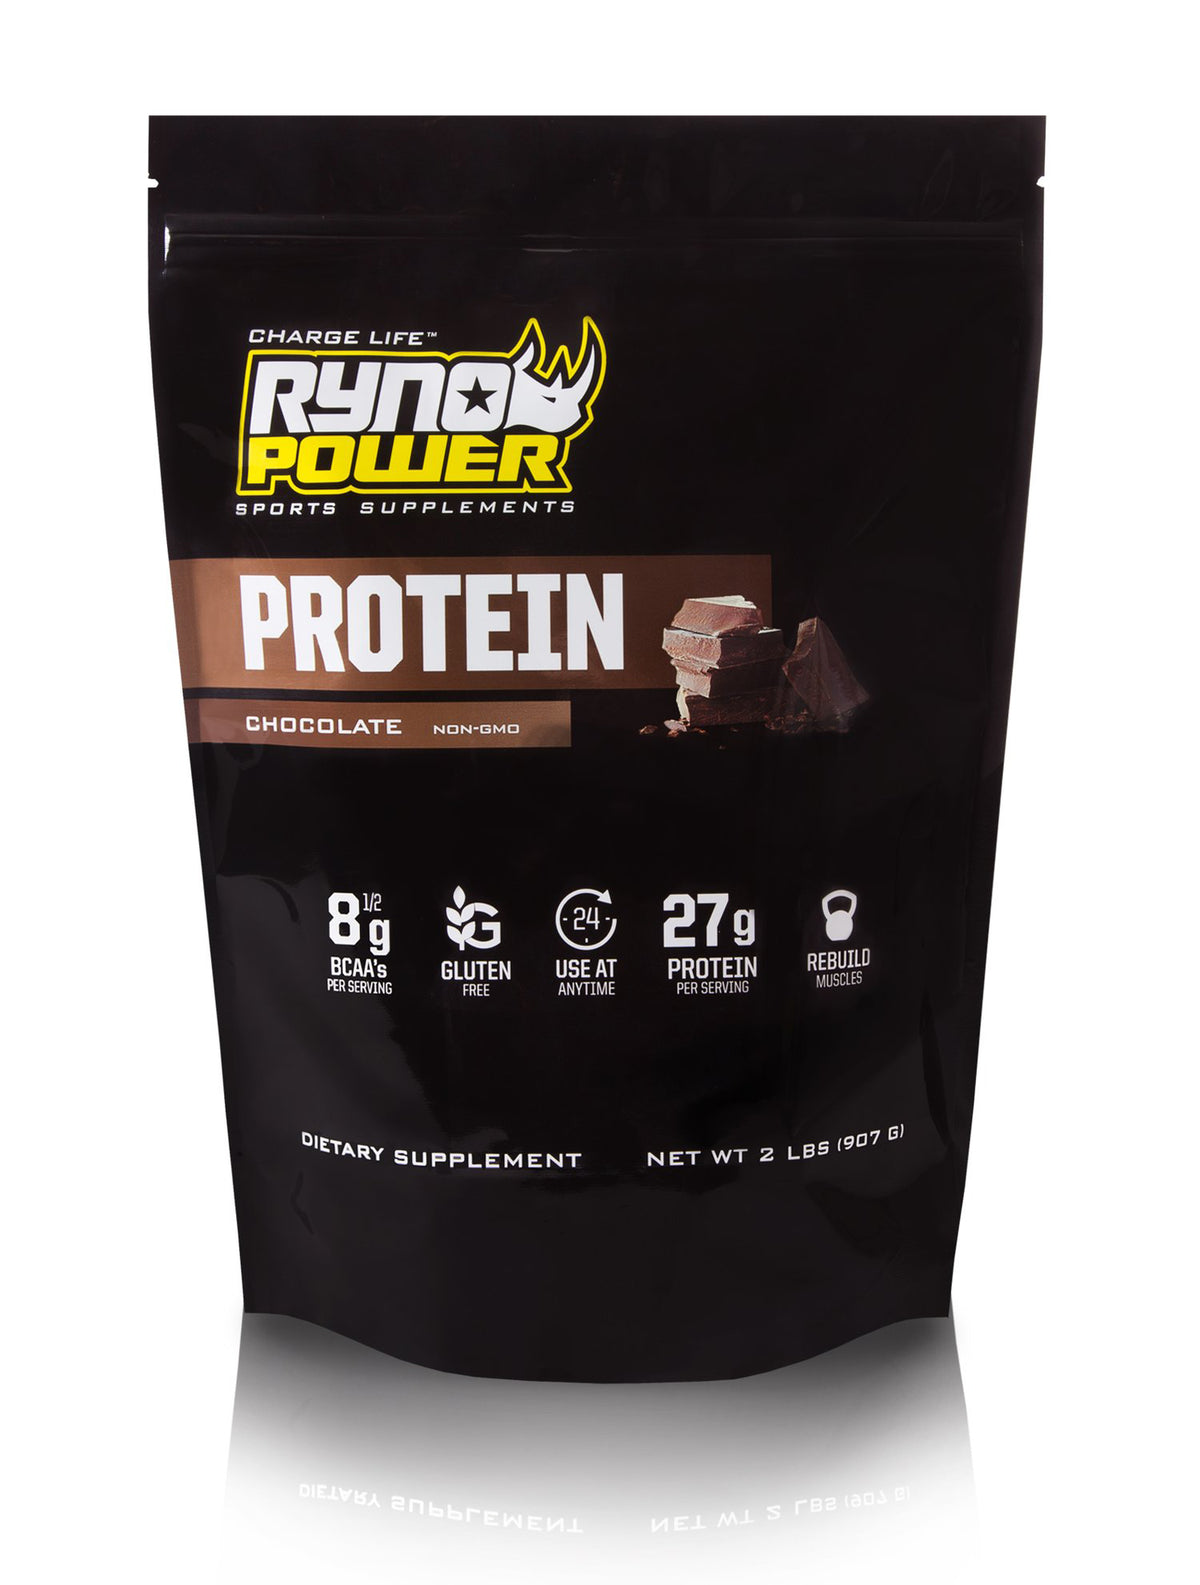 PROTEIN Premium Whey Powder 2lb - Chocolate 